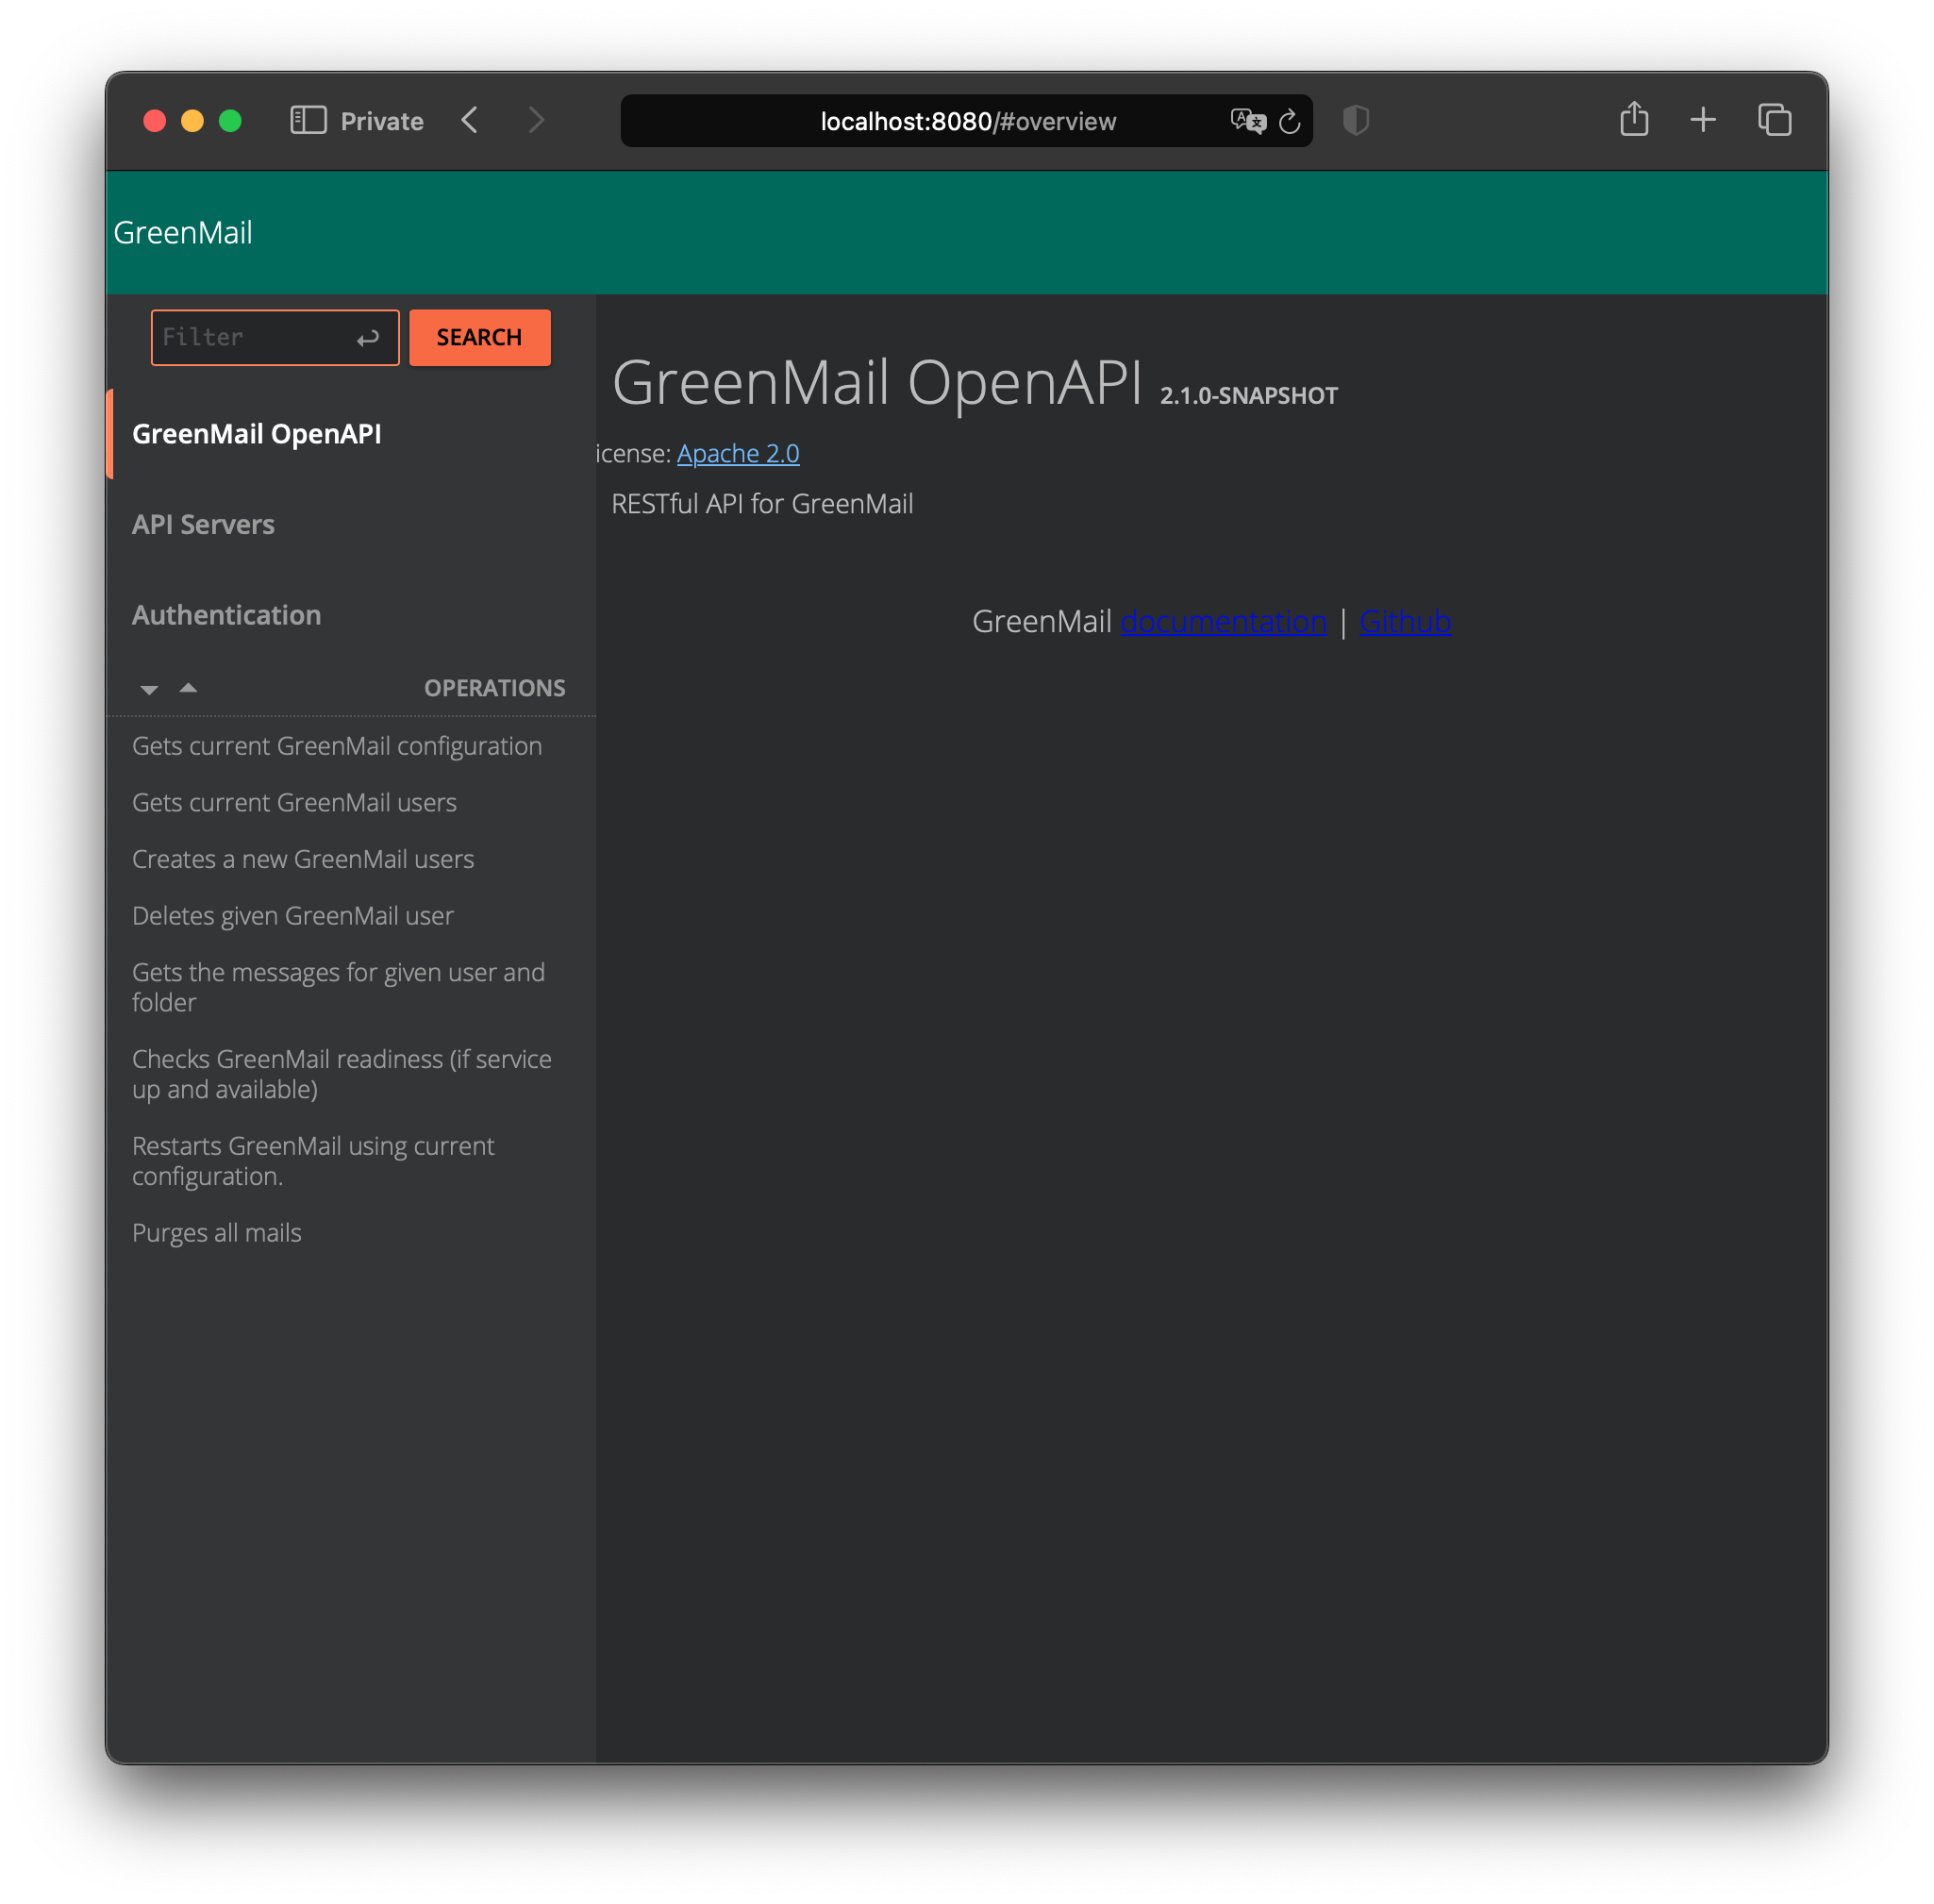 GreenMail OpenAPI UI